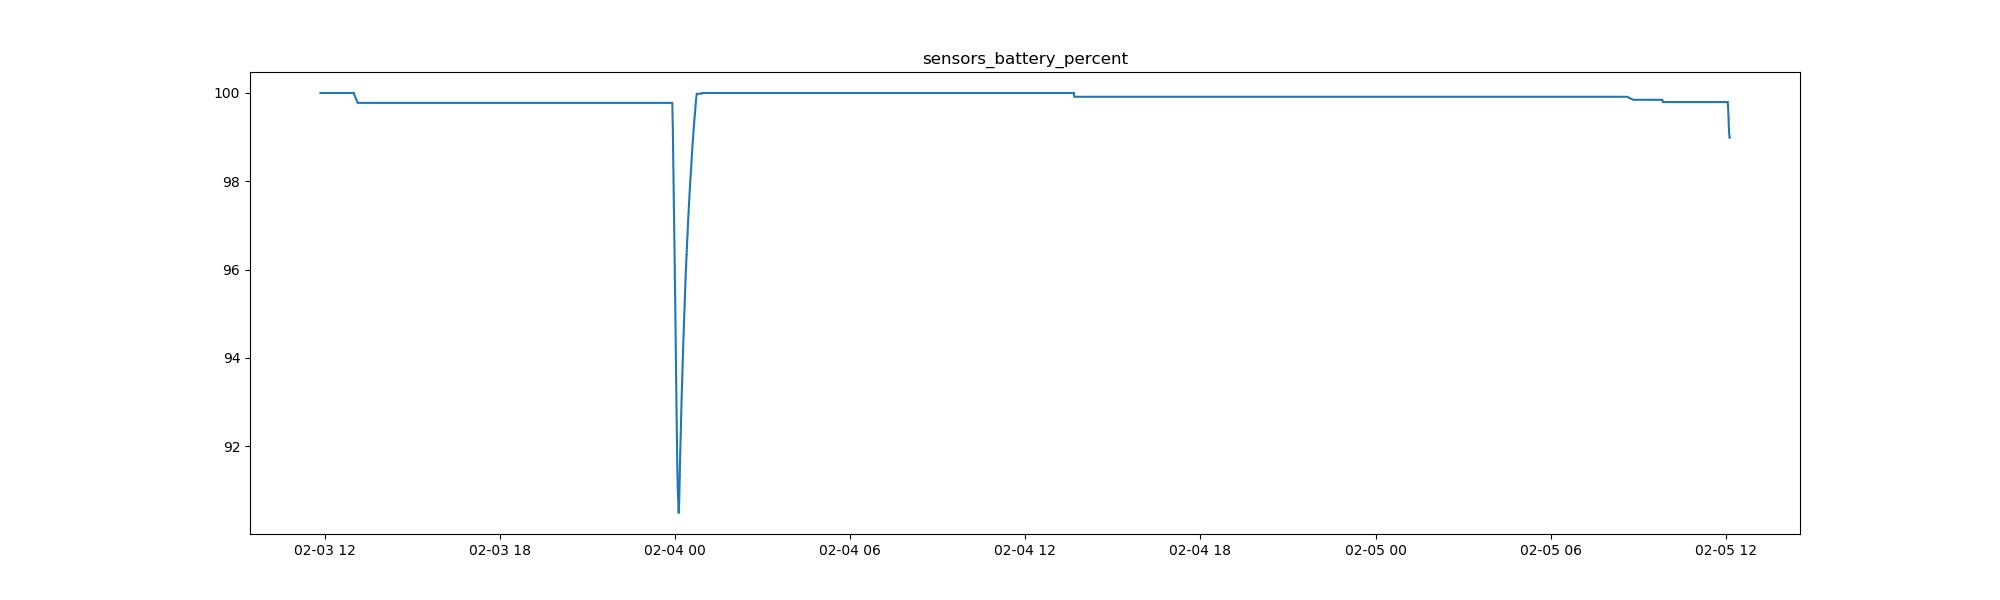 results-sensors_battery_percent.png